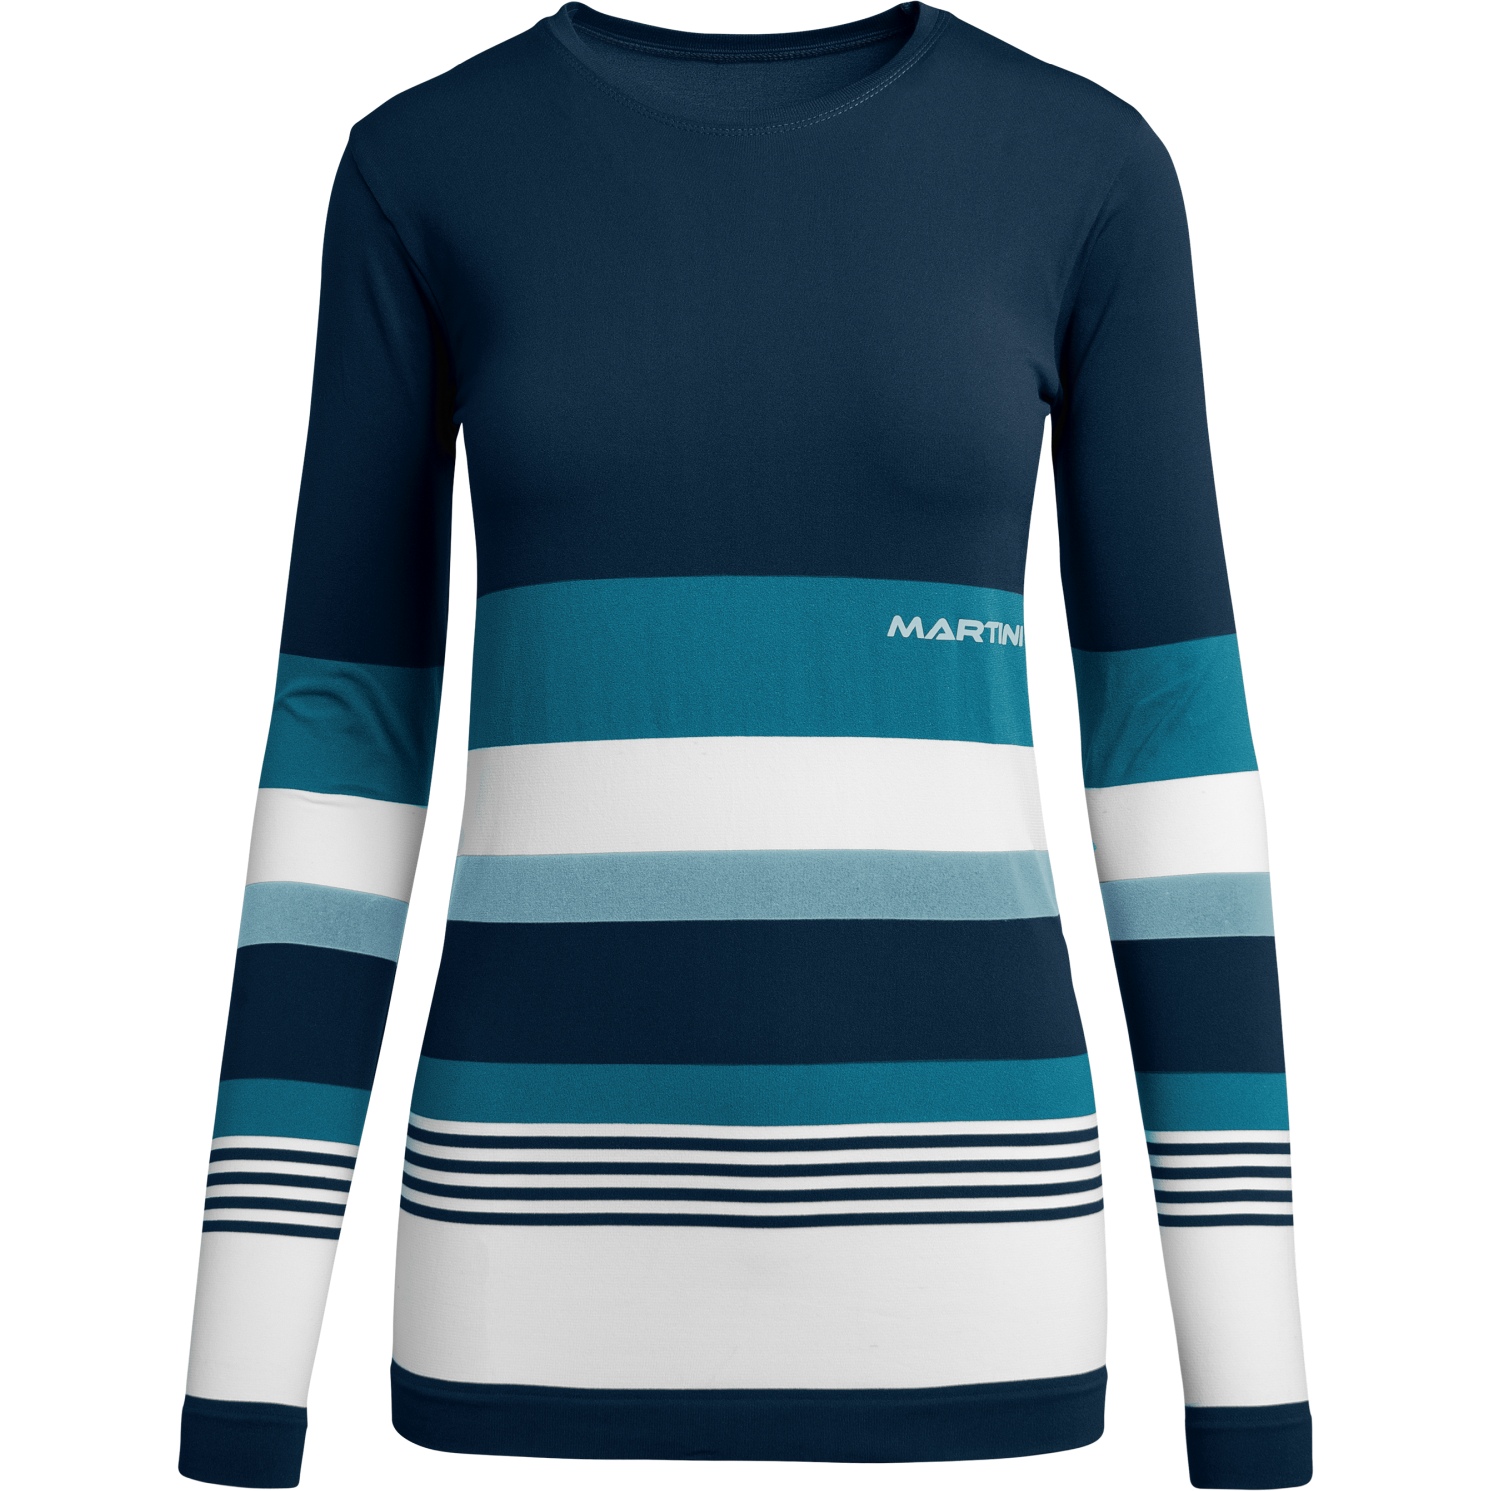 Produktbild von Martini Sportswear Passion Langarm-Shirt Damen - true navy/lake/ice